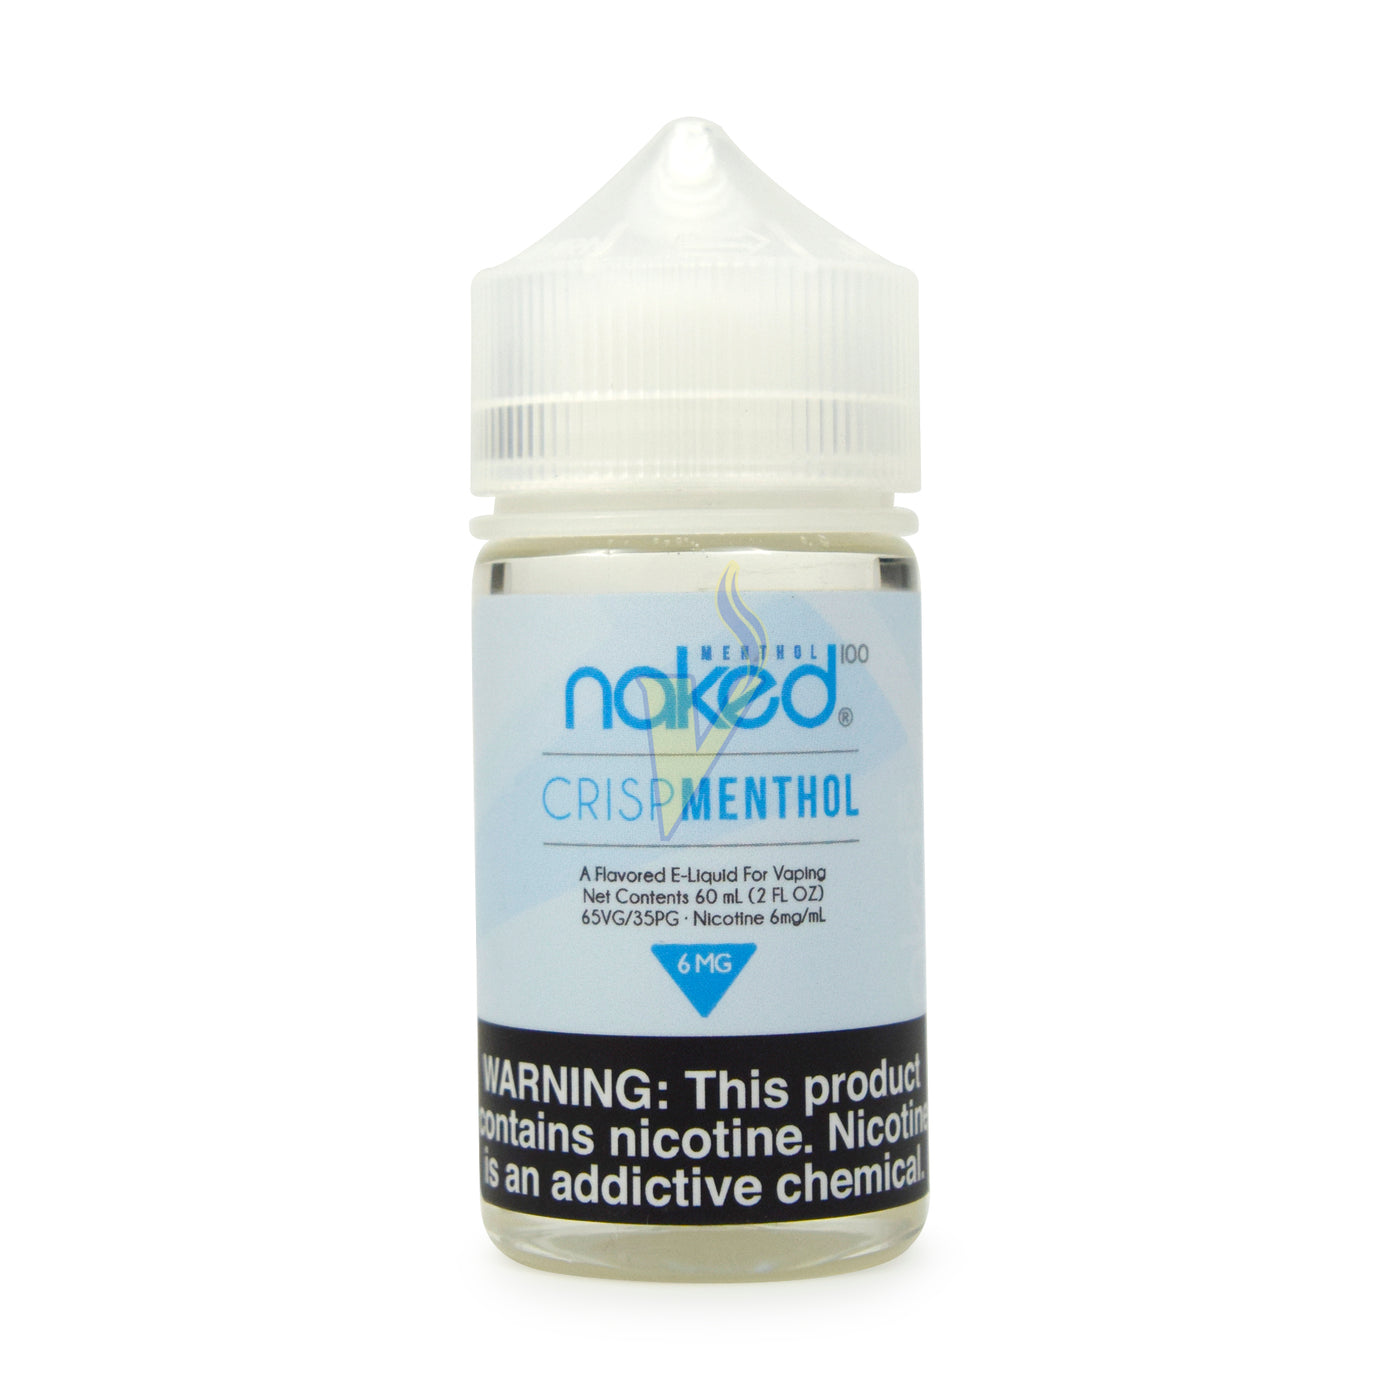 Naked E-Liquid (60mL)